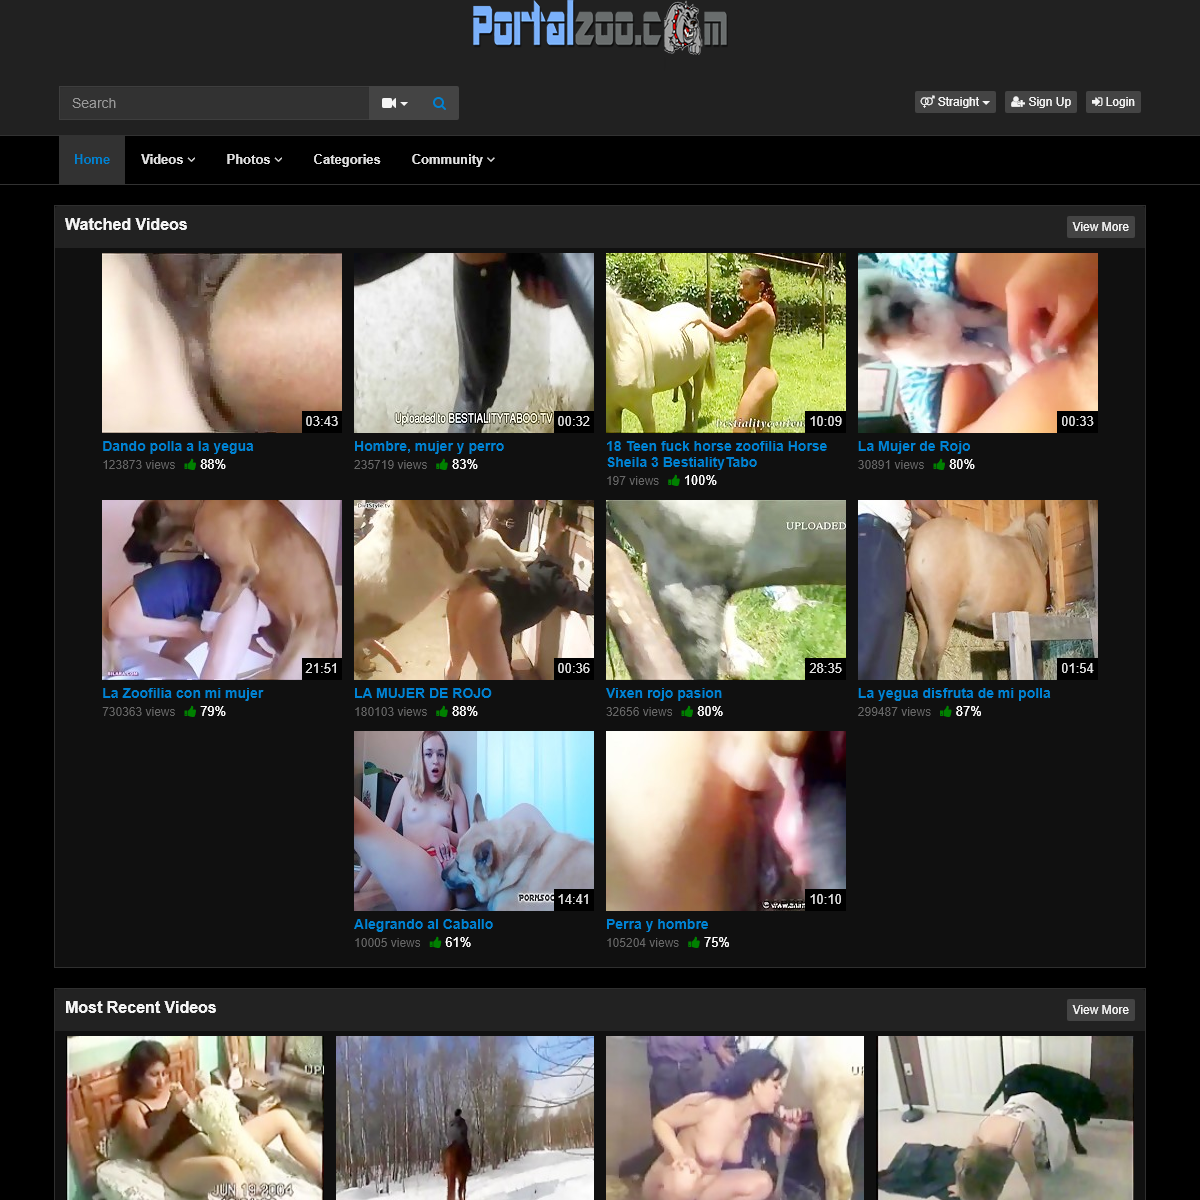 A complete backup of www.portalzoo.com